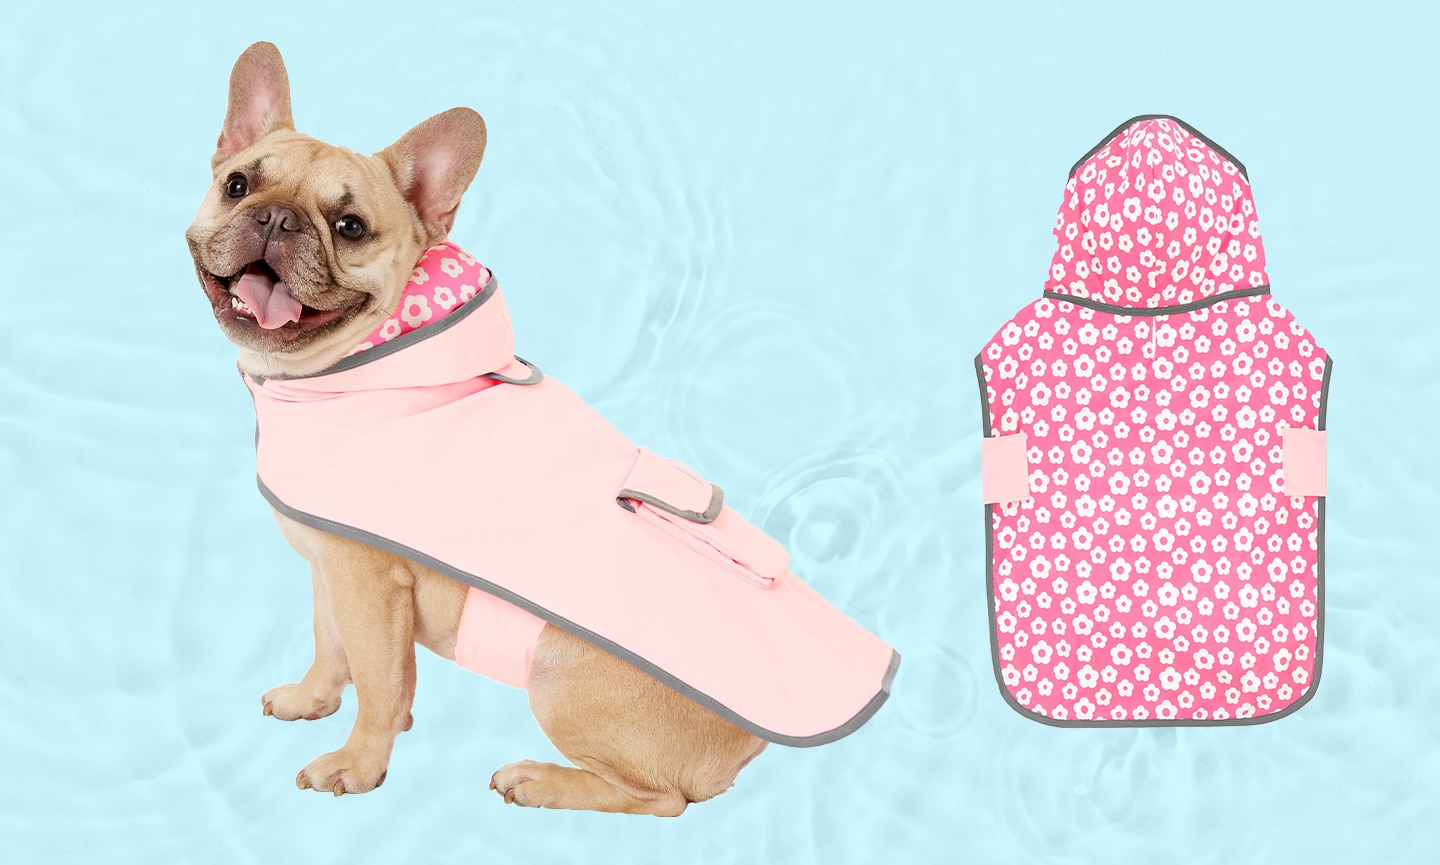 Frisco Reversible Packable Travel Dog Raincoat